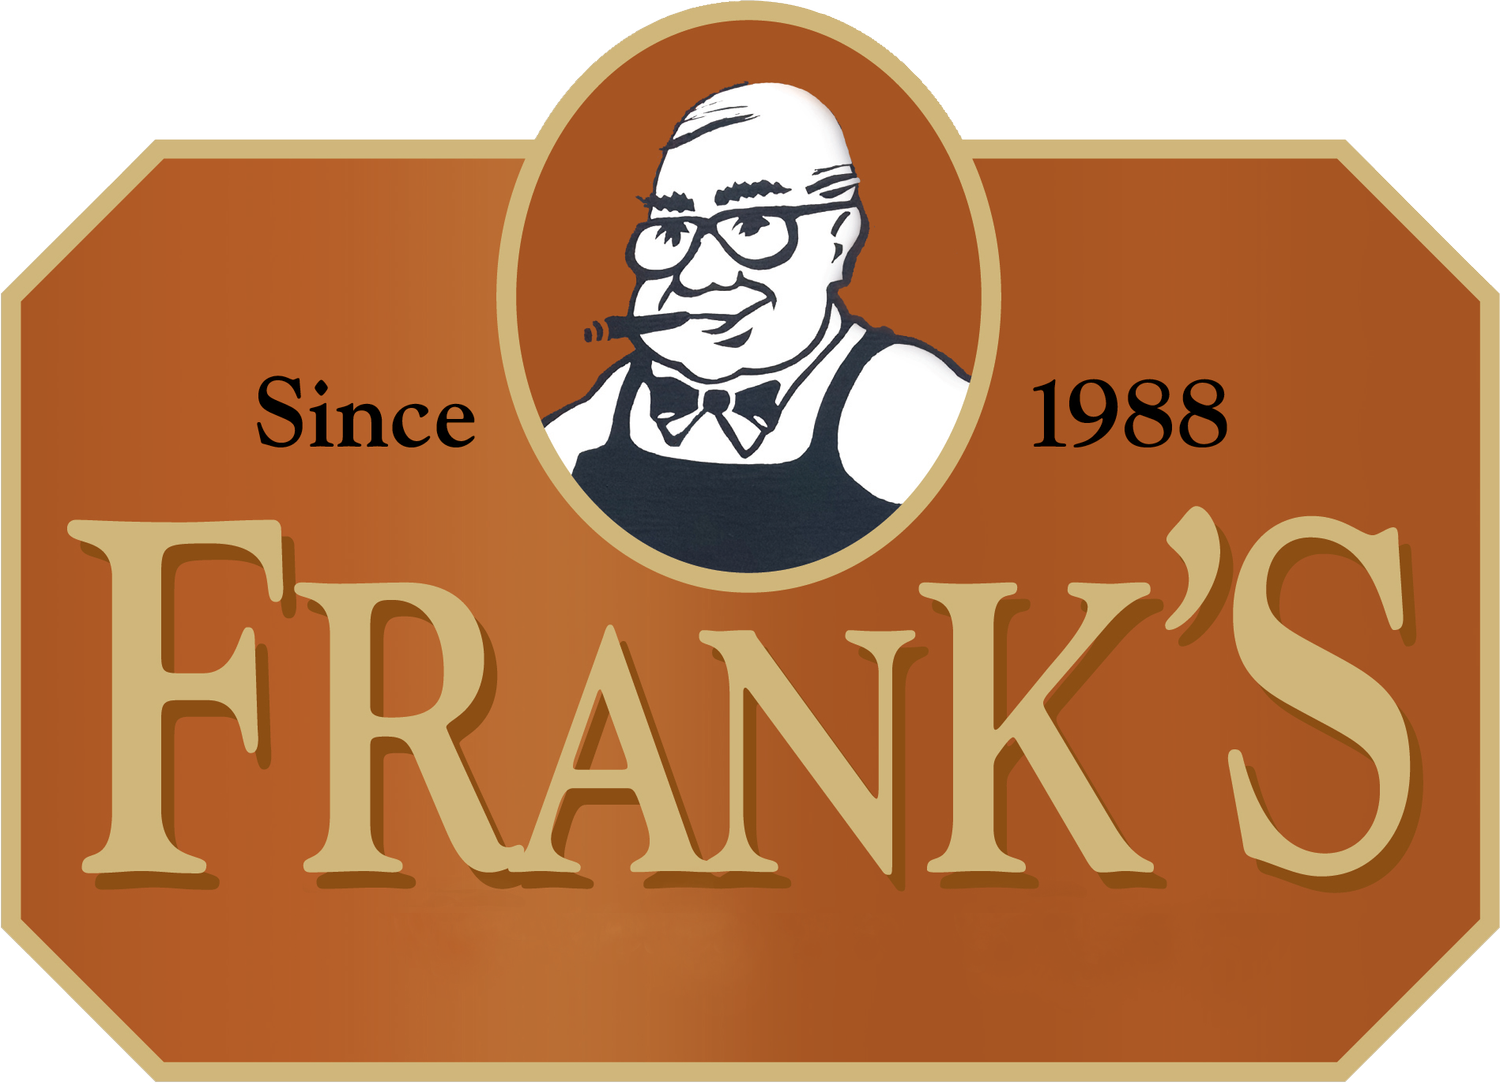 Franks and Franks Outback Restaurant